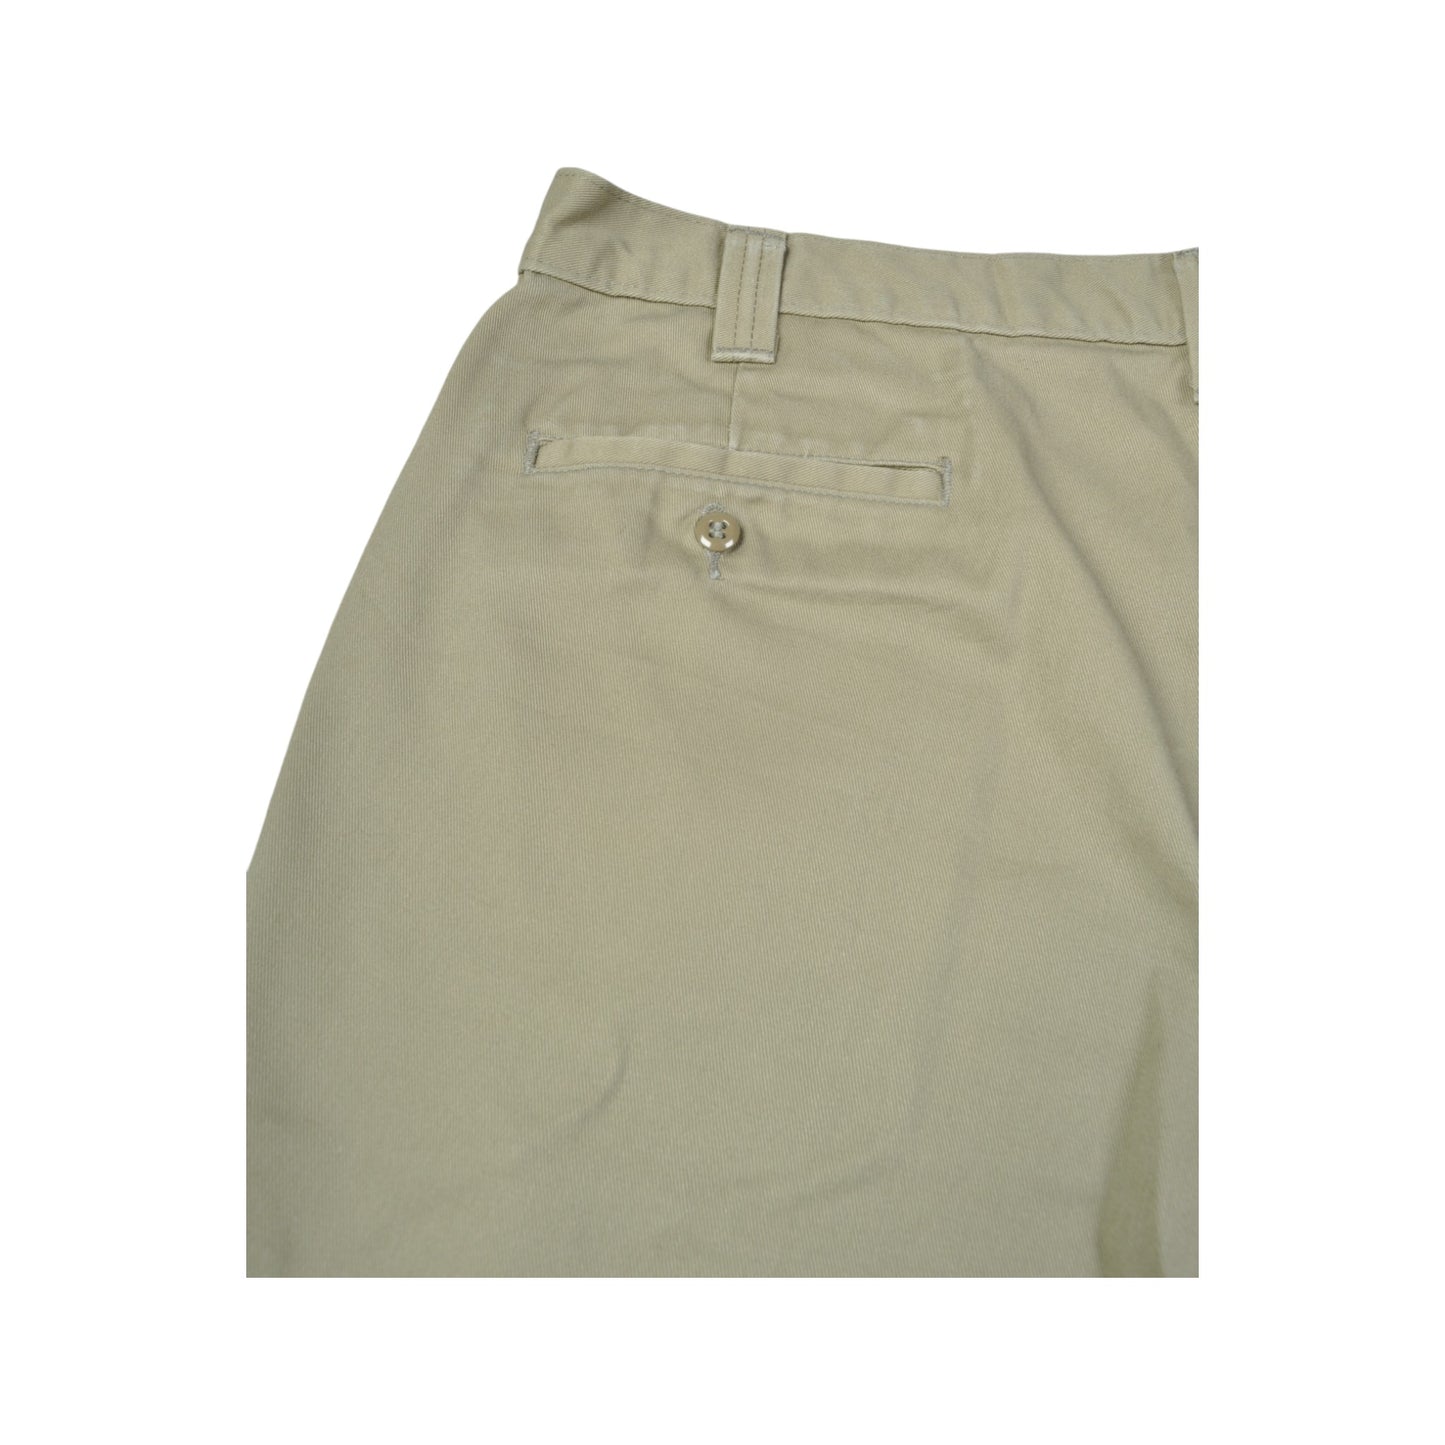 Vintage Carhartt Workwear Casual Shorts Tan W44